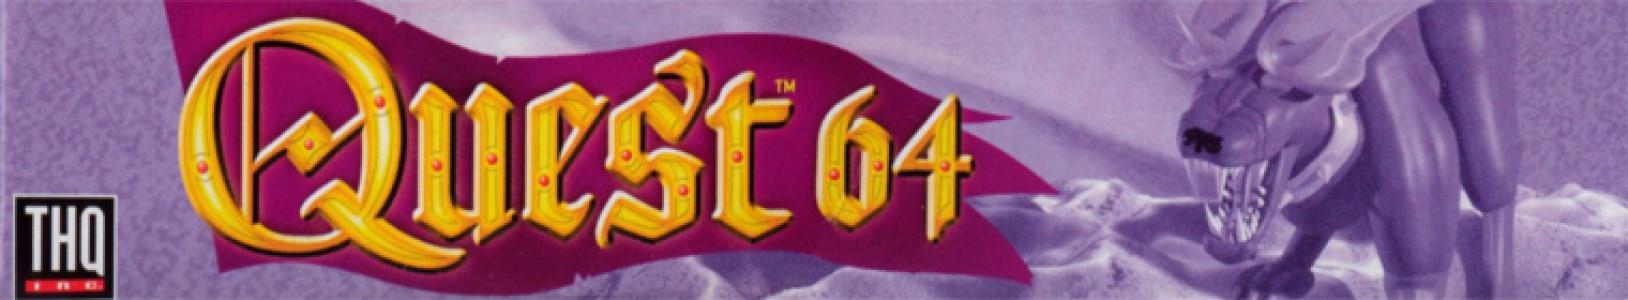 Quest 64 banner